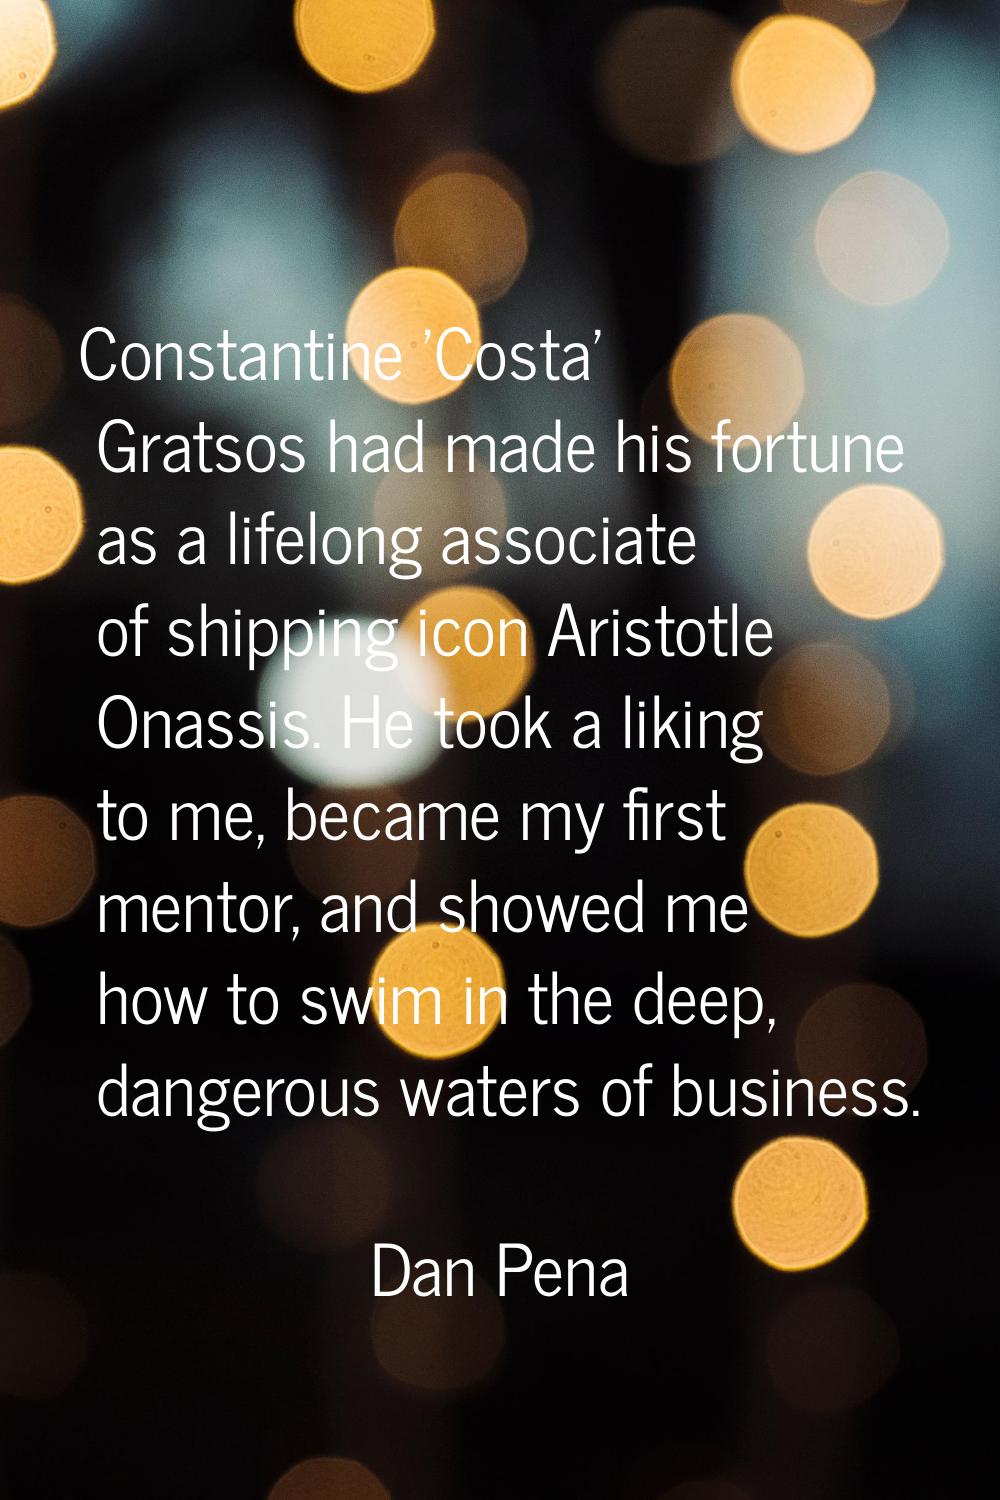 Constantine 'Costa' Gratsos had made his fortune as a lifelong associate of shipping icon Aristotle